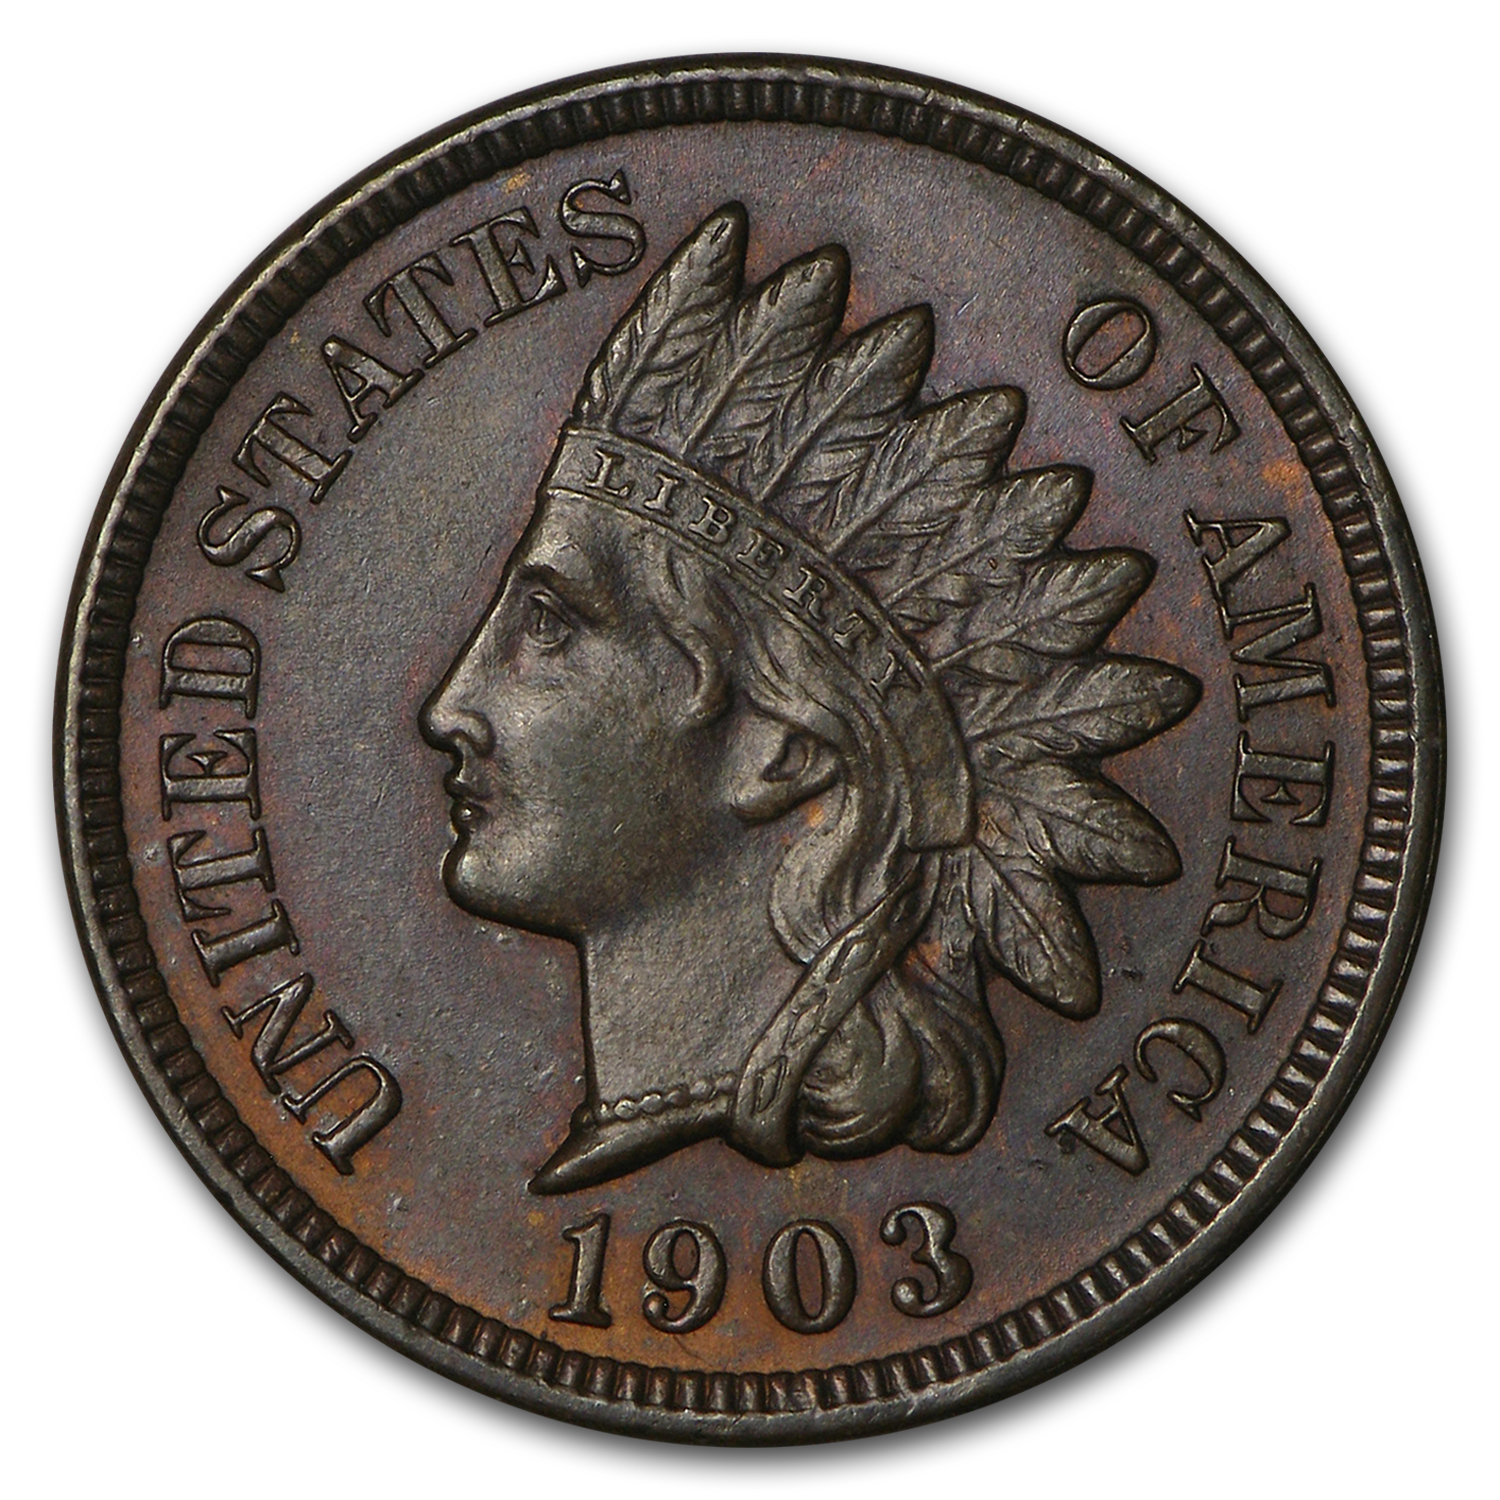 Buy 1903 Indian Head Cent BU (Brown)